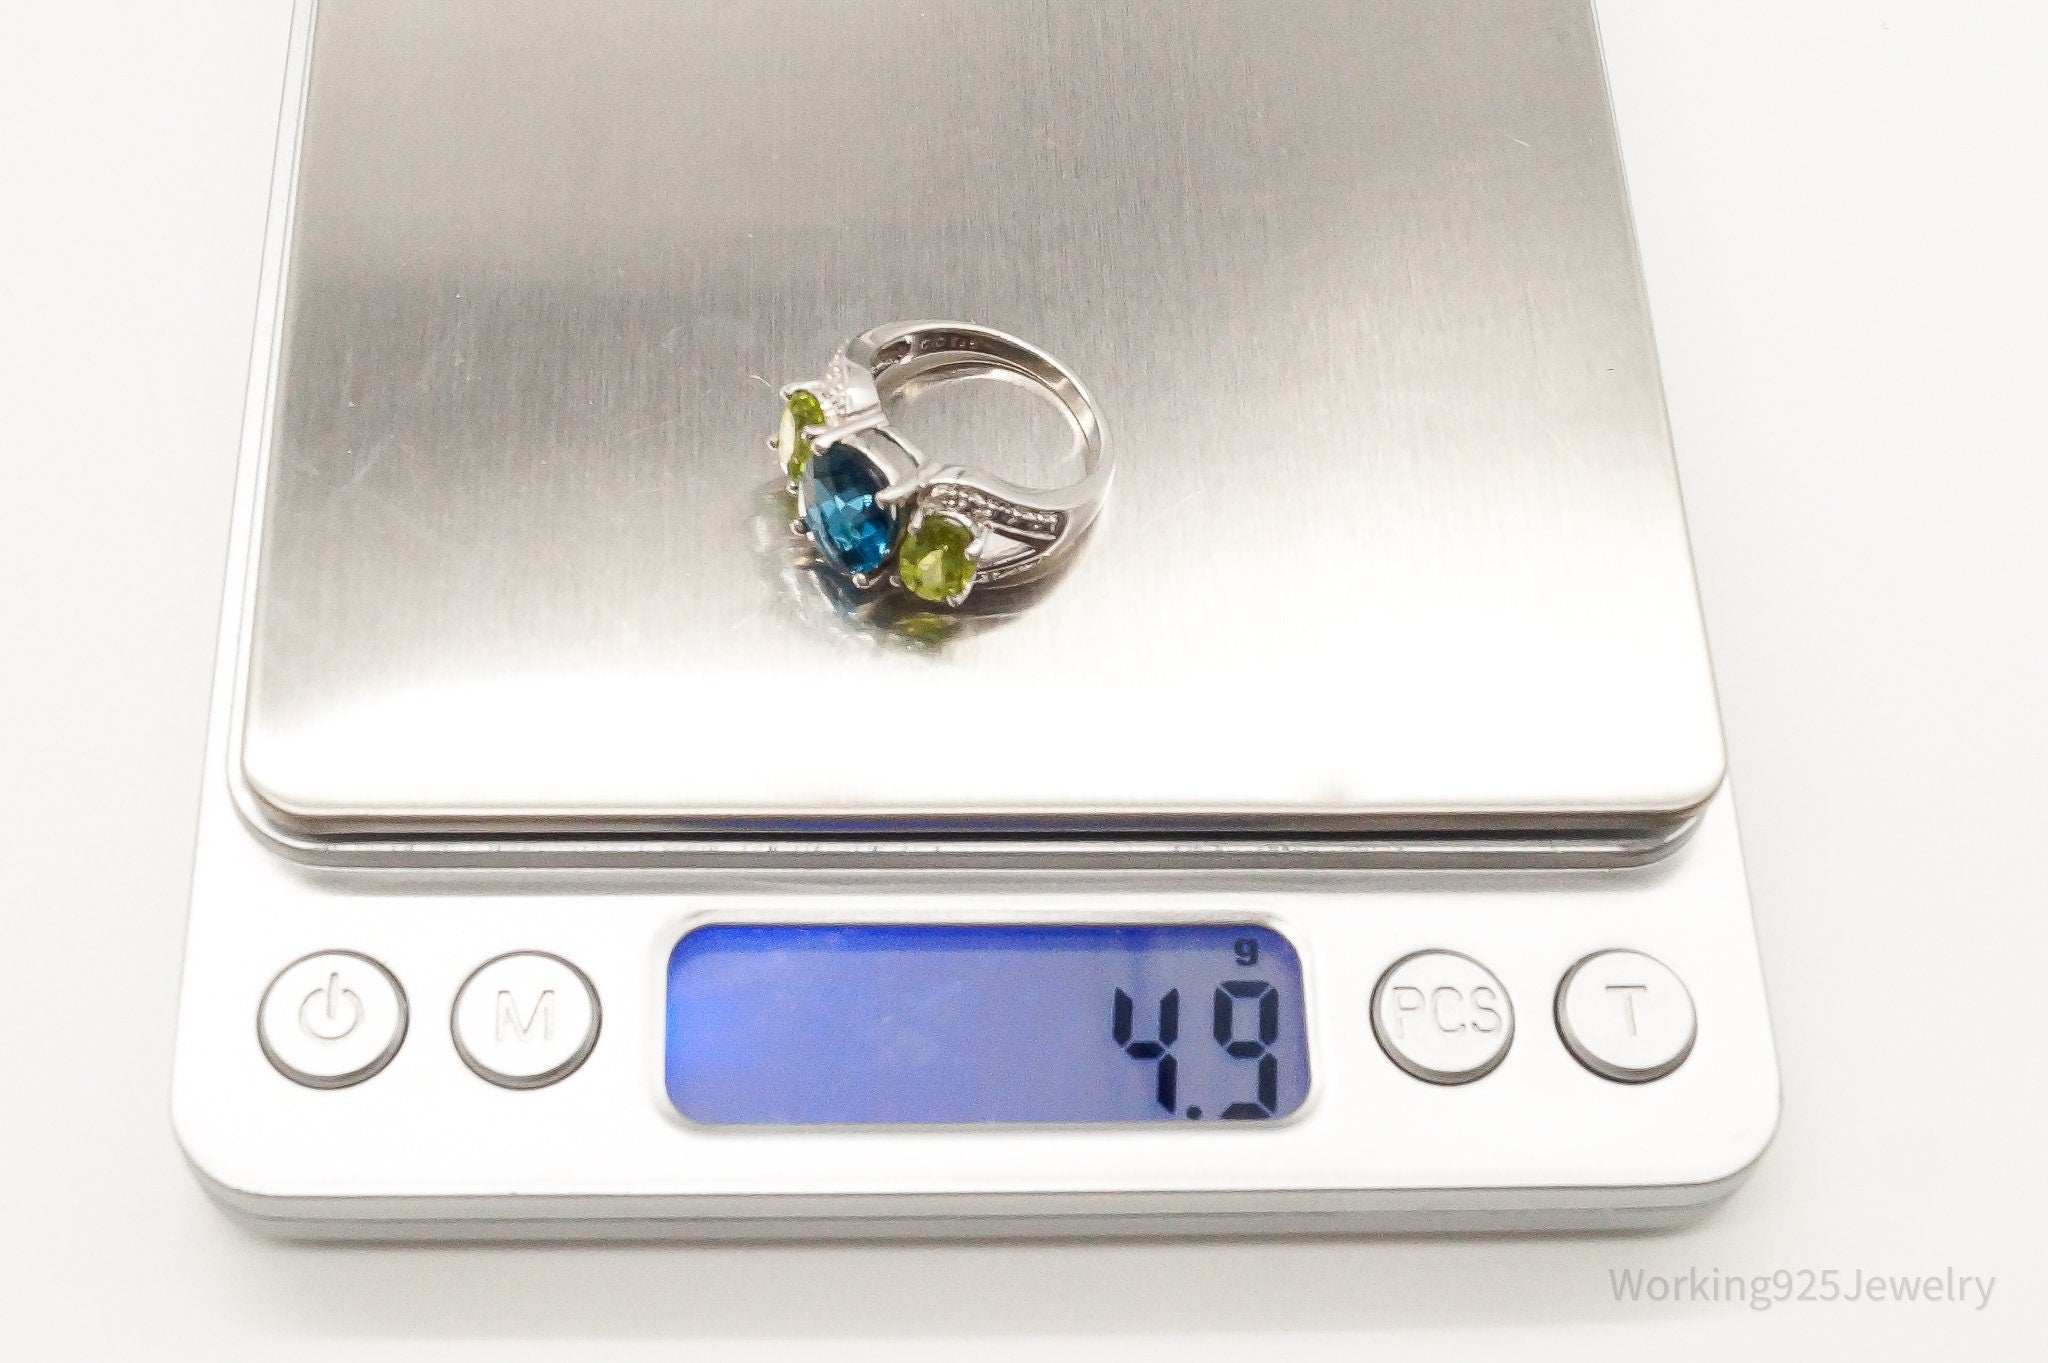 Designer CID Blue Topaz Peridot Cubic Zirconia Sterling Silver Ring - Size 6.25